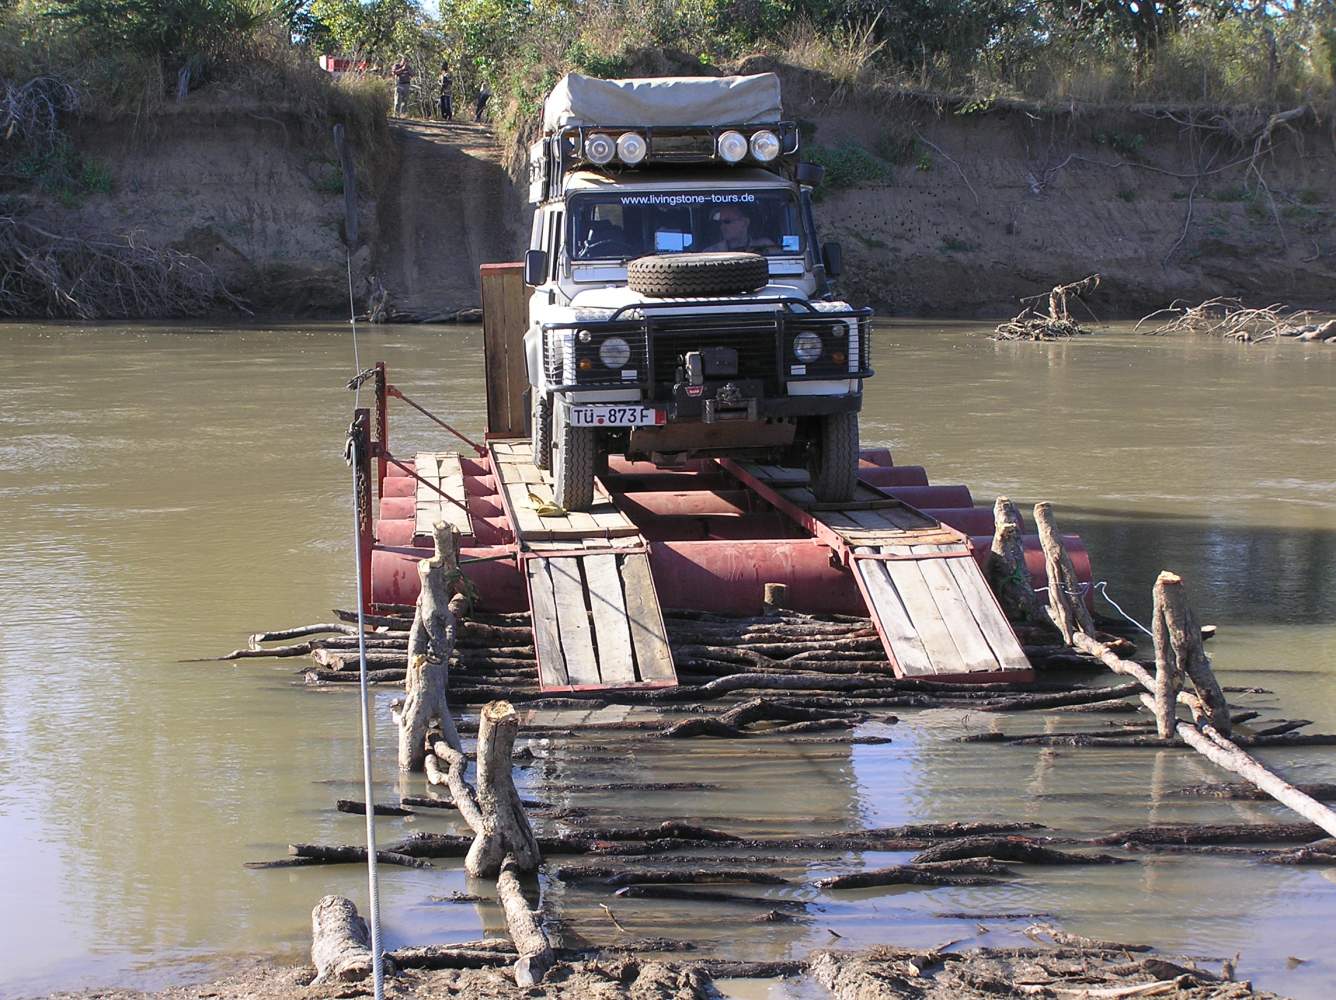 Afrika Safari mit dem Land Rover auf der Trans Afrika Tour 